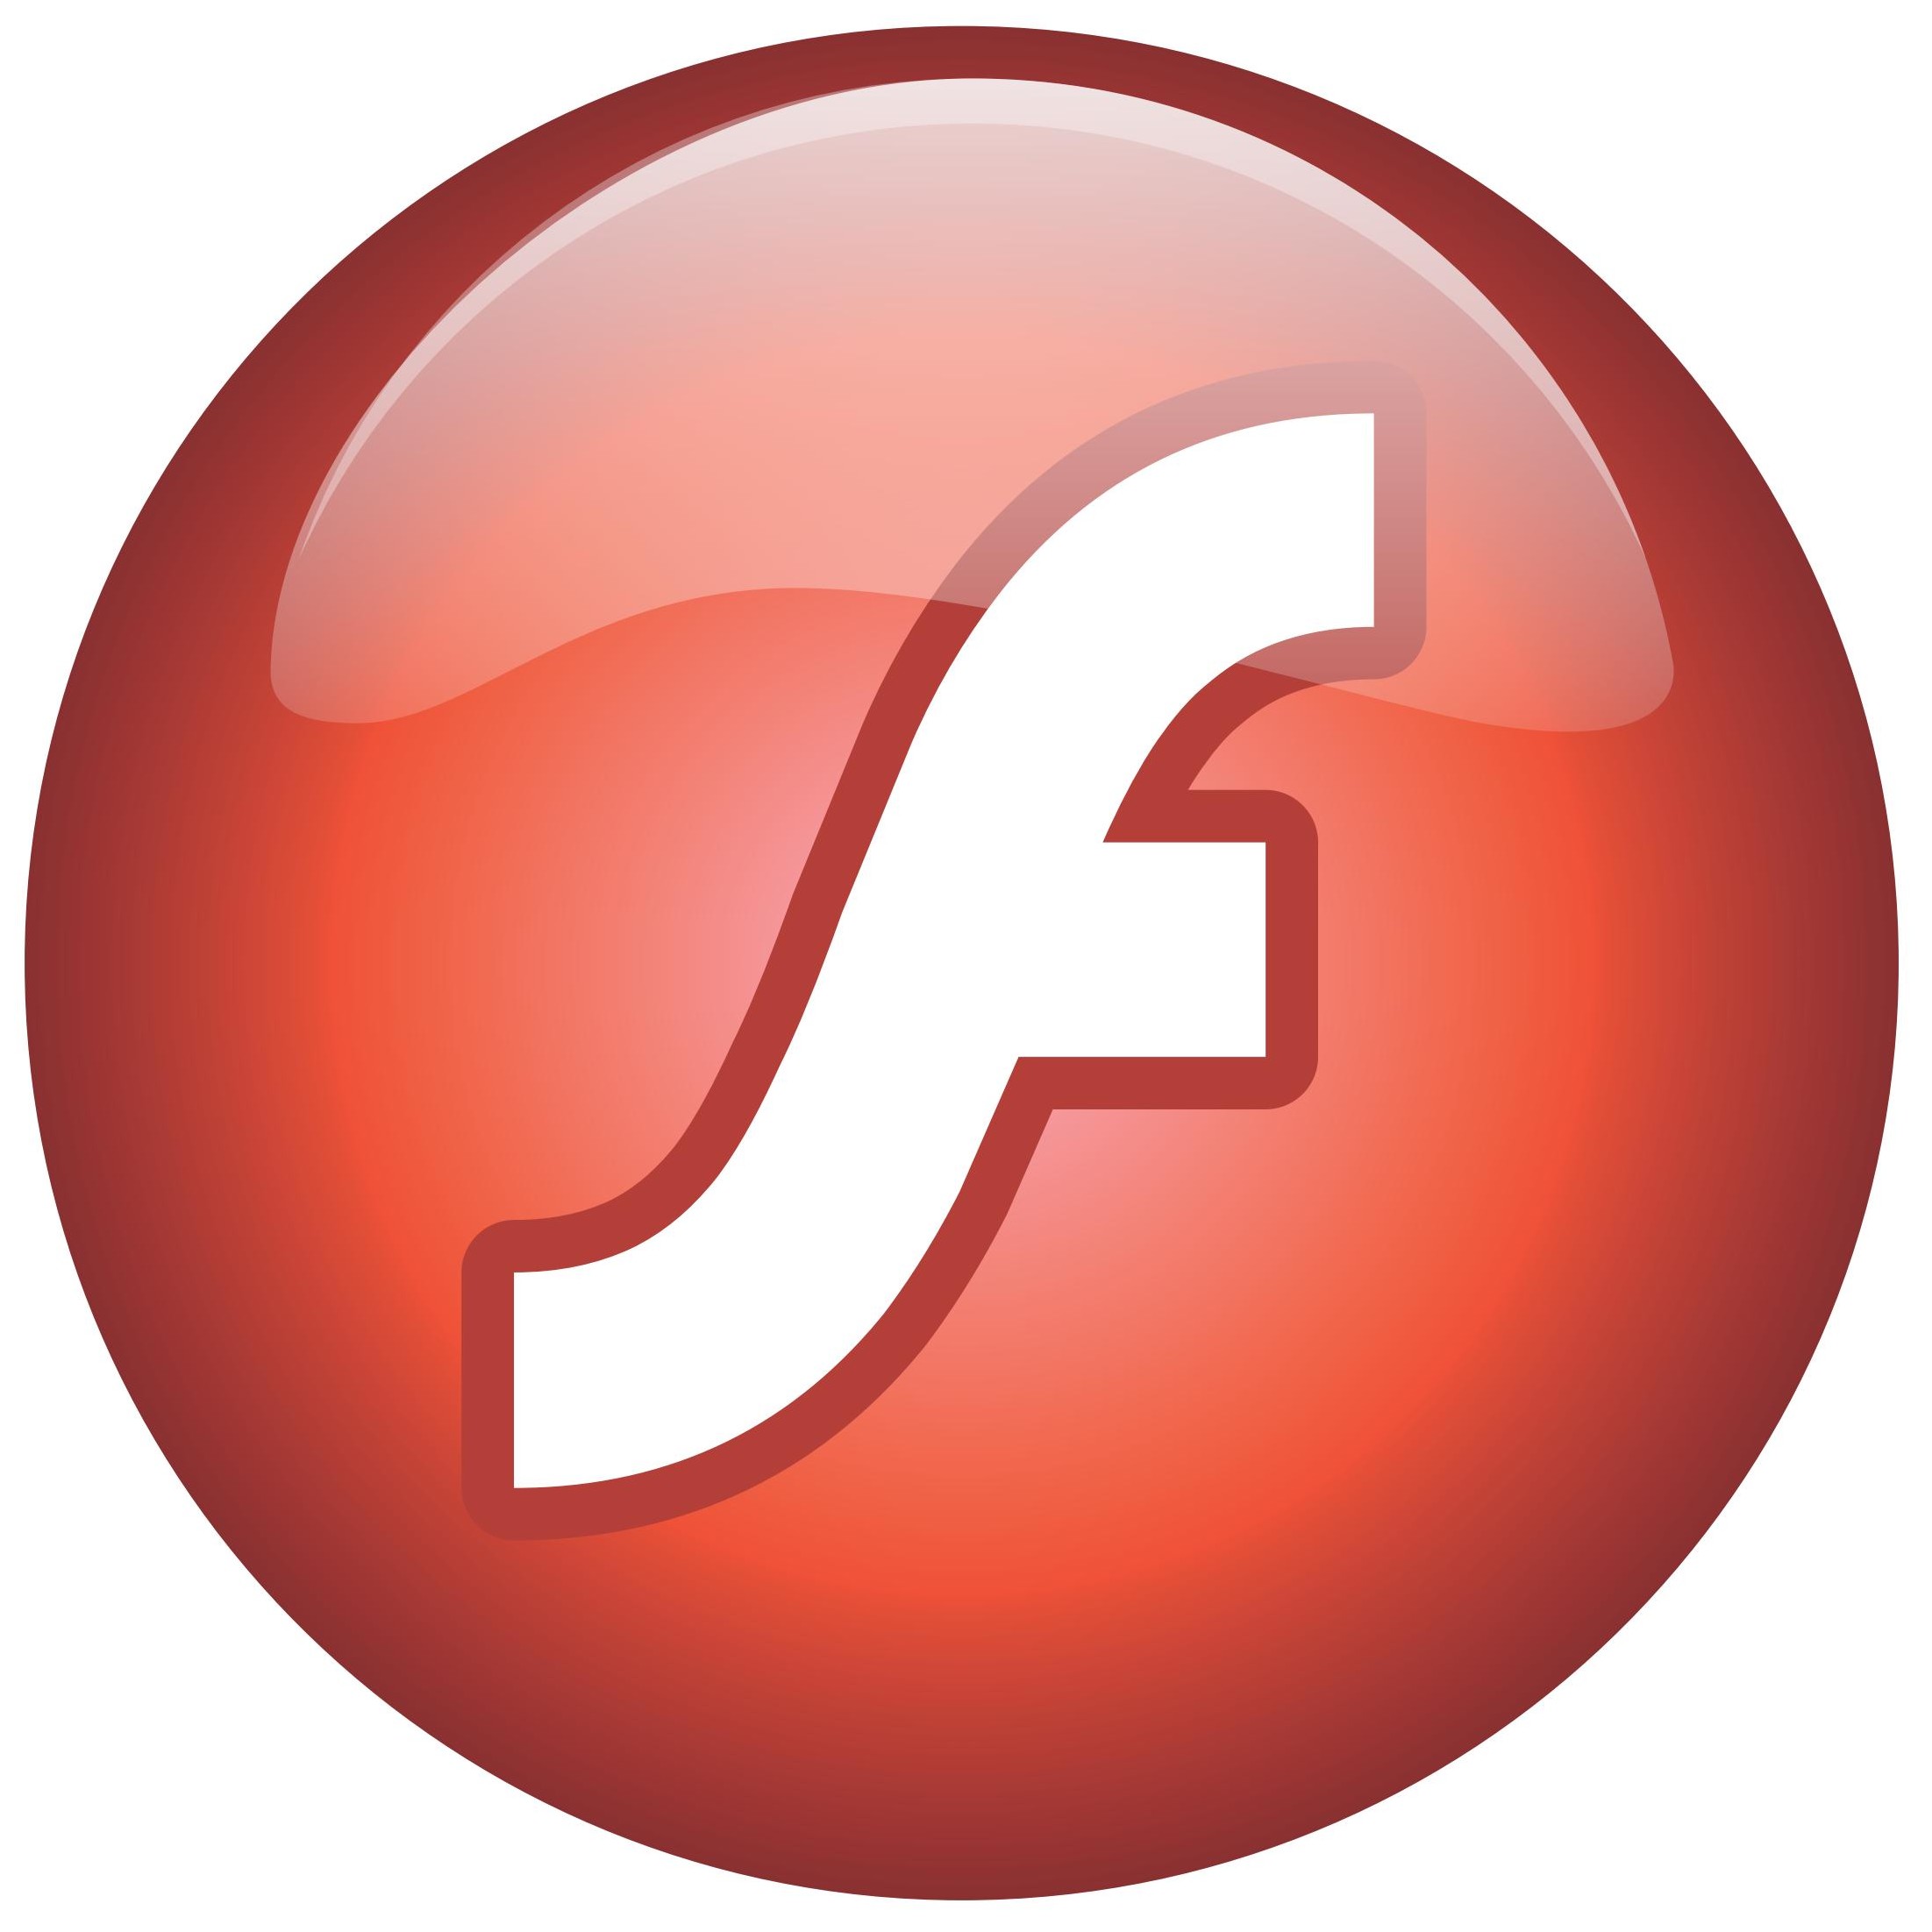 Adobe Flash Logo [Eps File] - Adobe Flash 8 Vector, Transparent background PNG HD thumbnail